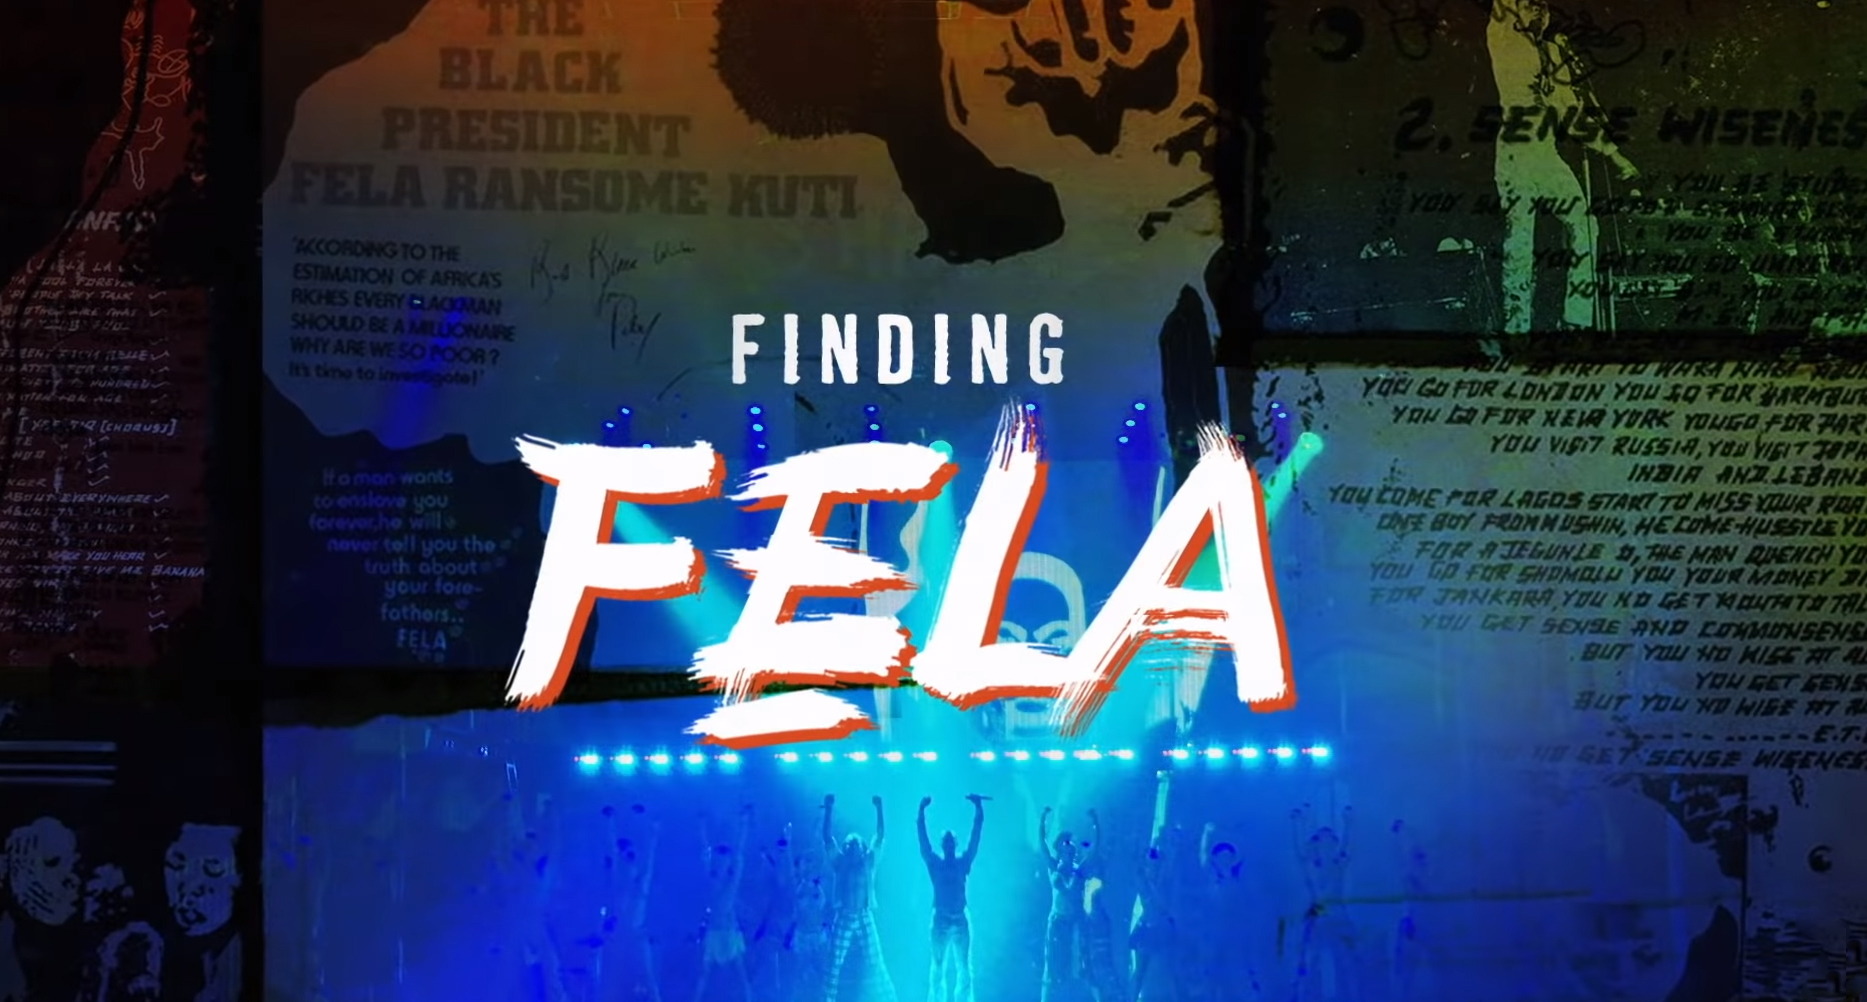 Finding Fela